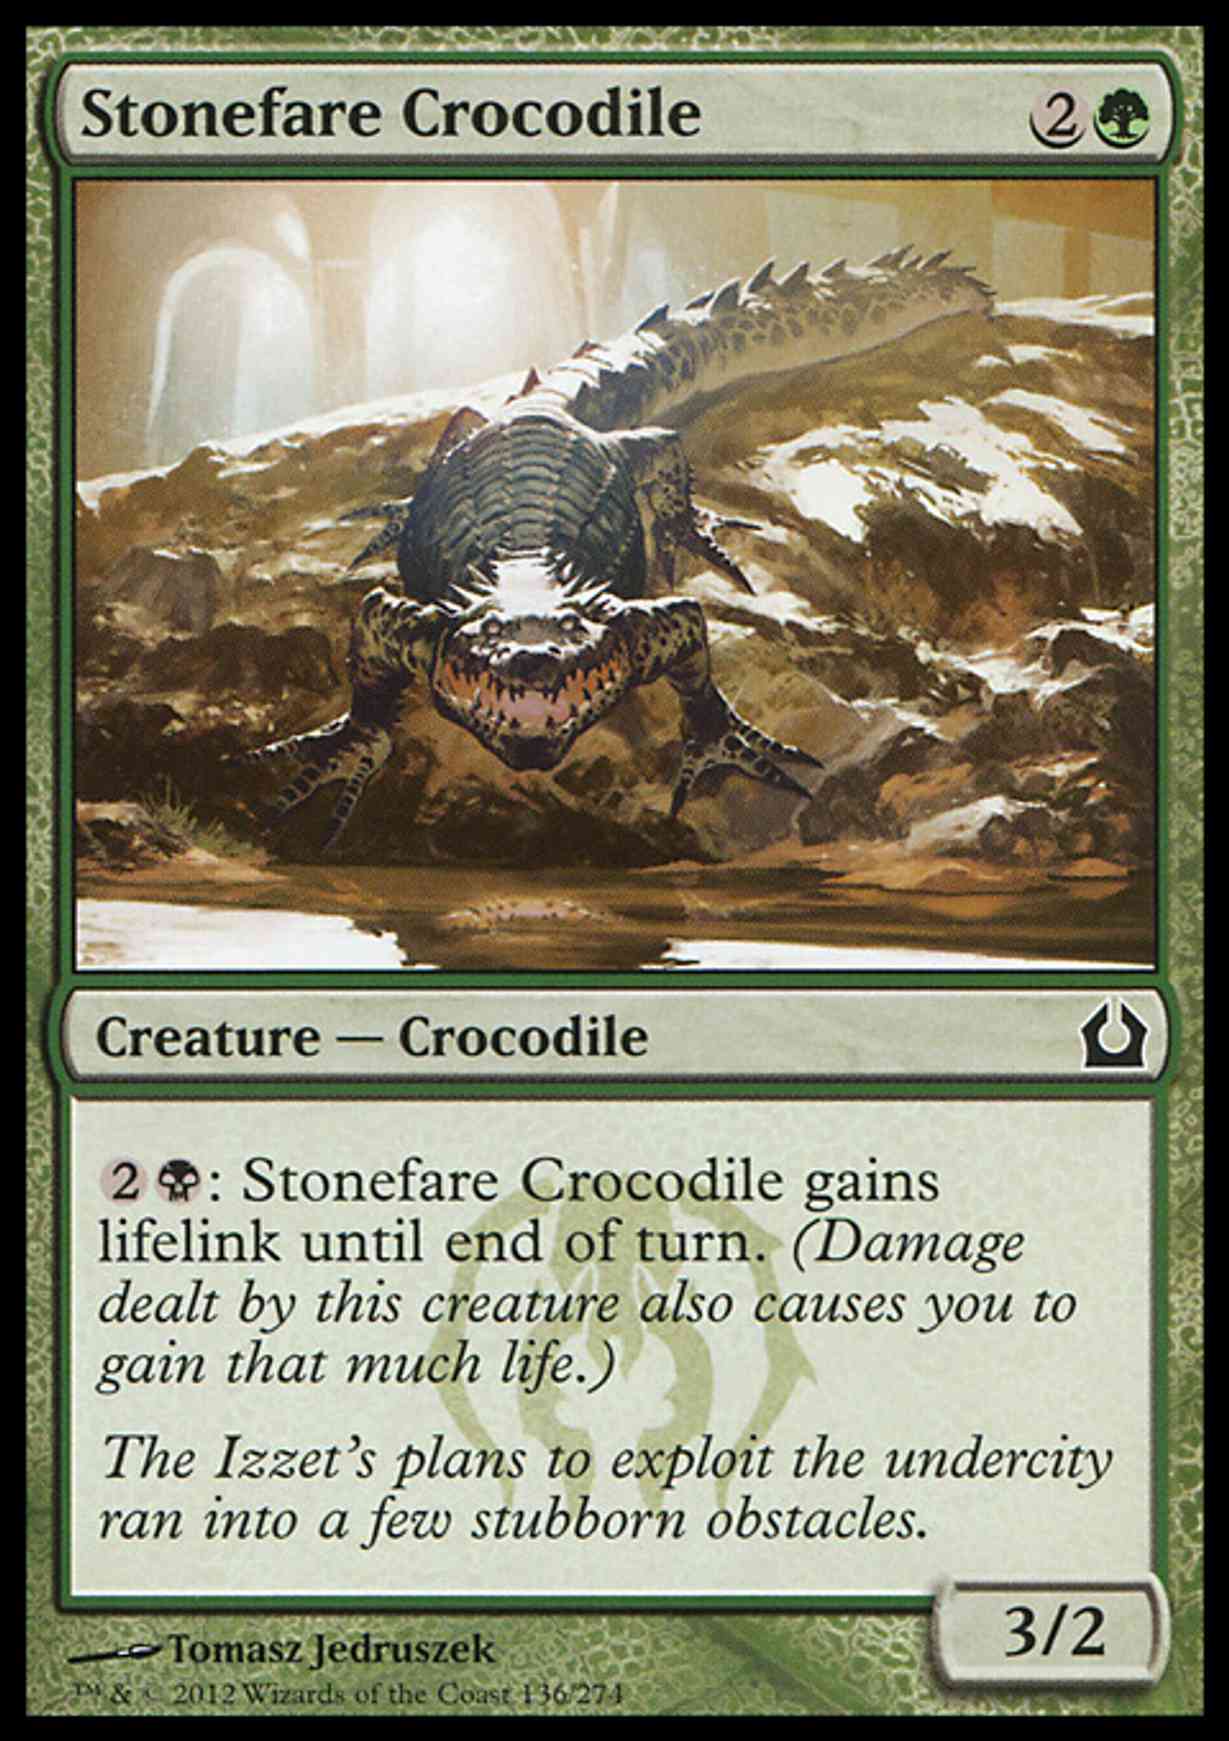 Stonefare Crocodile magic card front